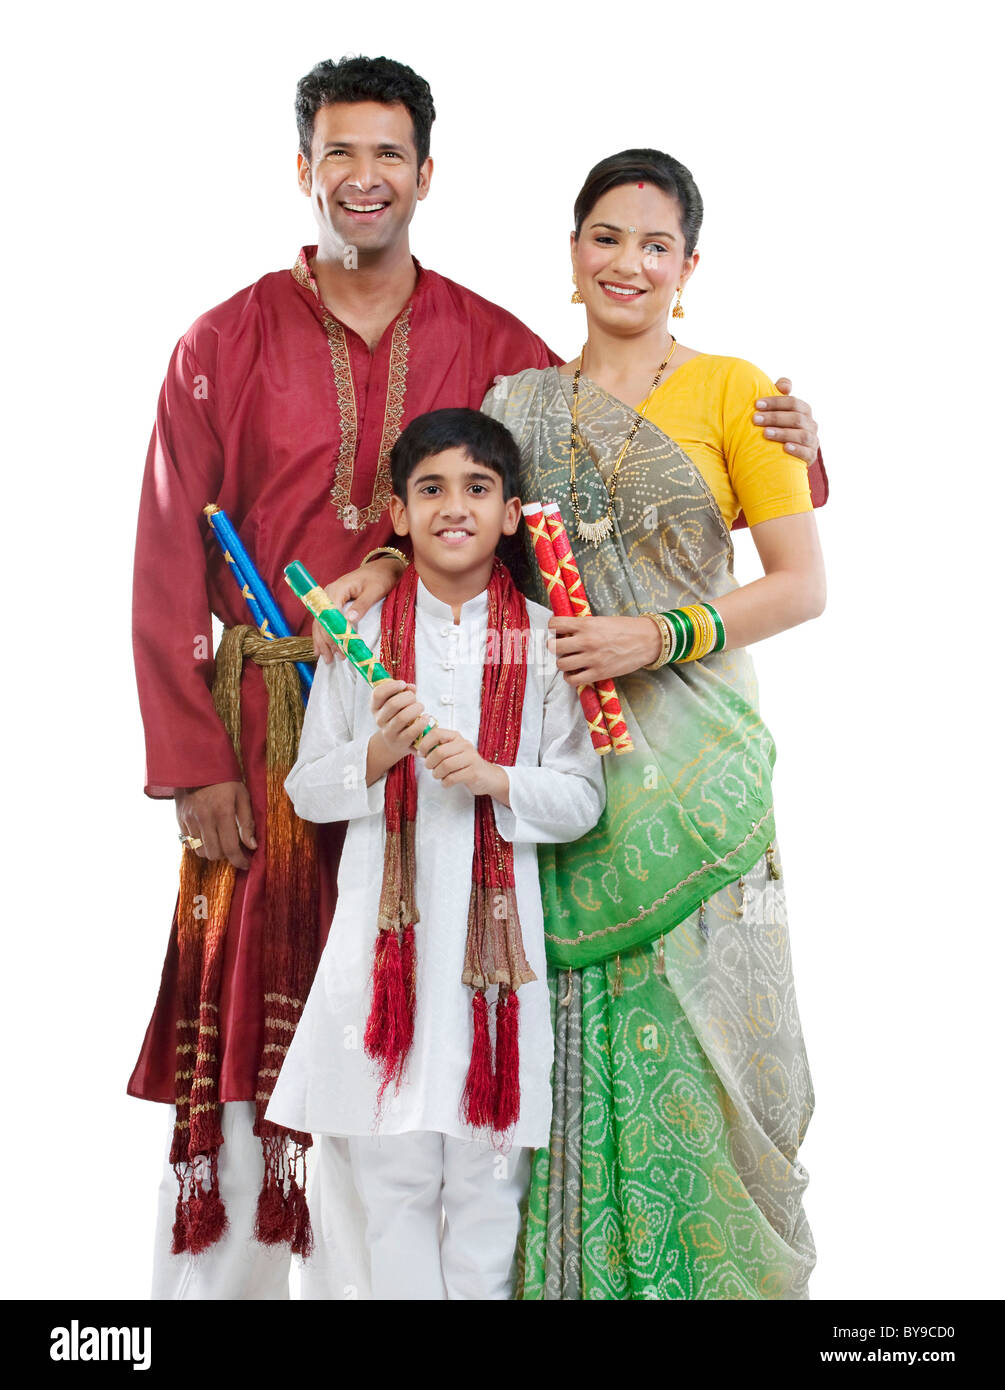 Portrait of a Gujarati family Stock Photo